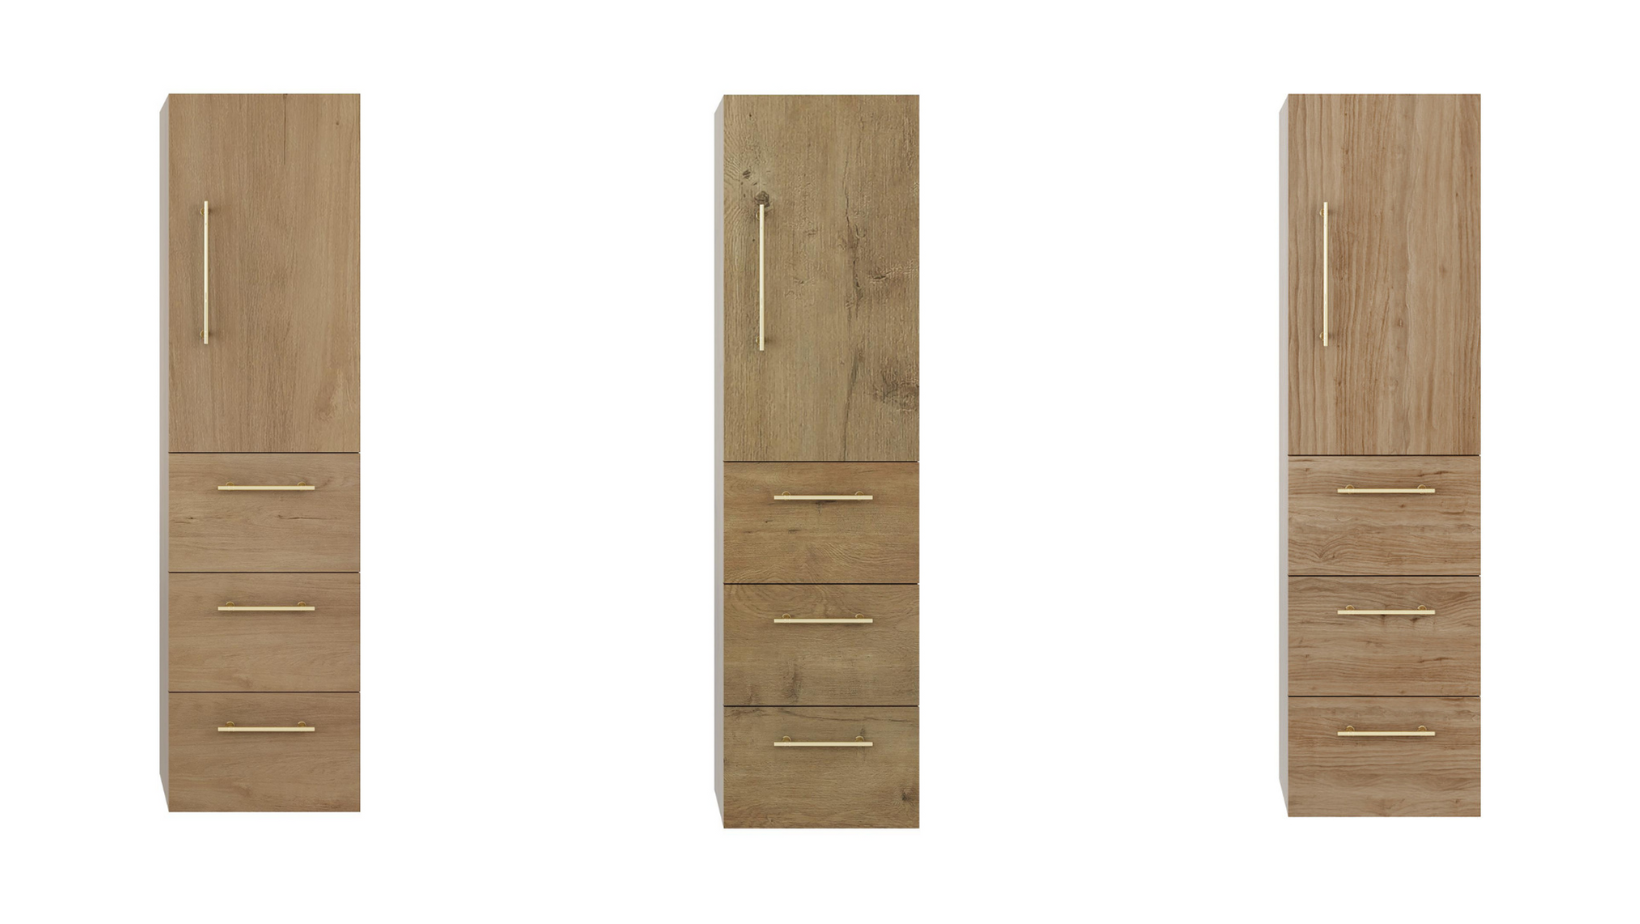 Elsa 16" Wall Mounted Linen Side Cabinet in Oak, White Oak, Natural Oak | Moreno Bath Floating Linen Cabinets & Towers